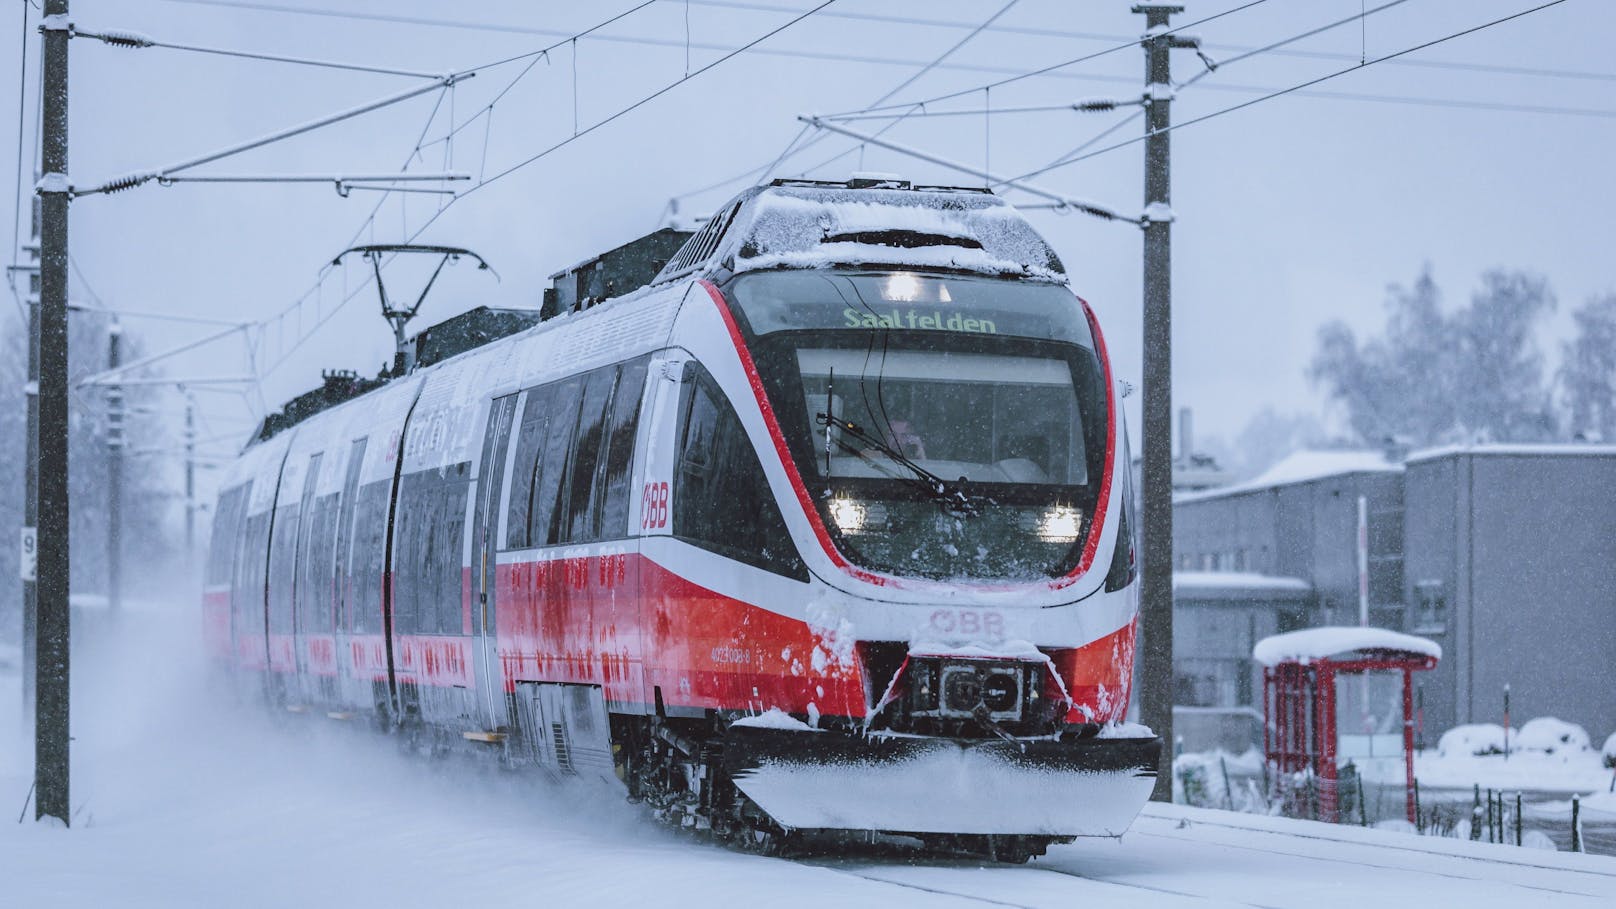 Bahn-Chaos! Hunderte Passagiere im Schnee gestrandet